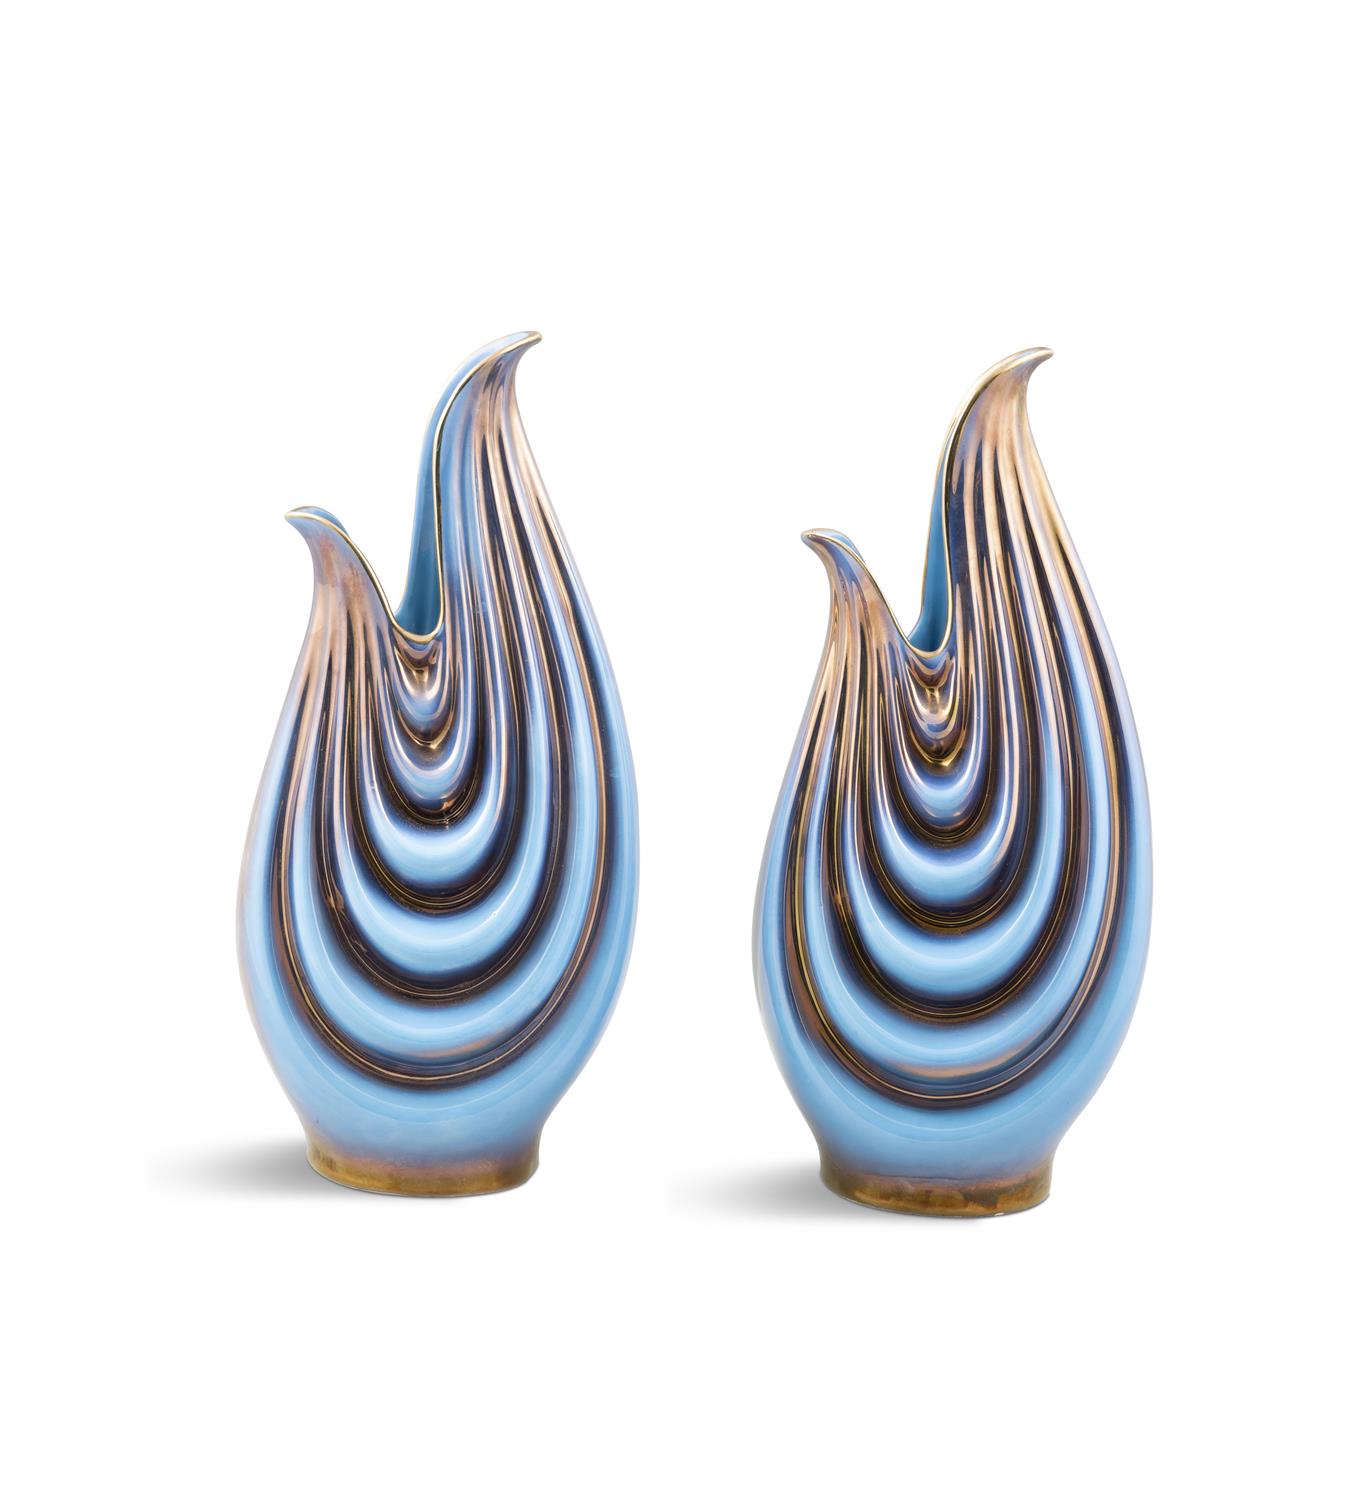 SICAS SESTO FIOR A pair of ceramic vases by Sicas Sesto Fior. Italy, c. 1970, with maker's mark.